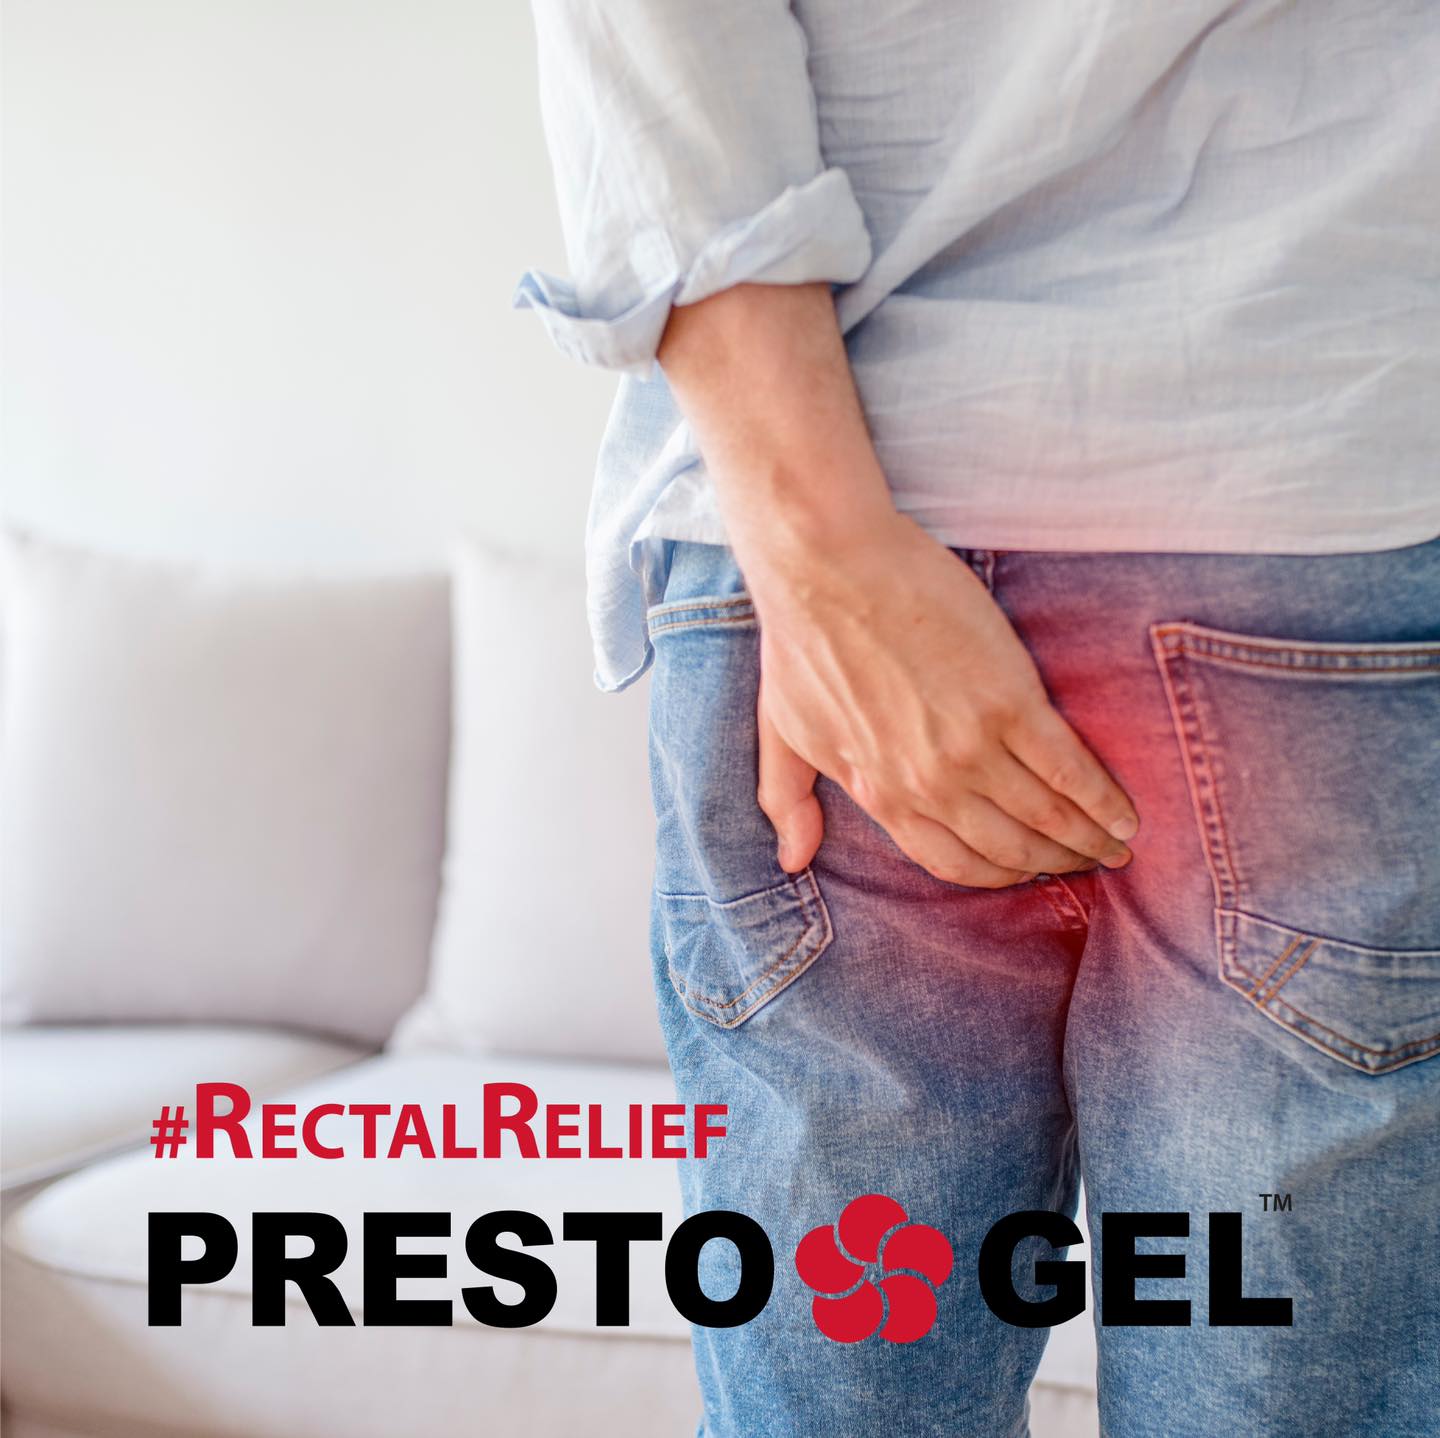 Presto Gel - A Natural Hemorrhoids Treatment